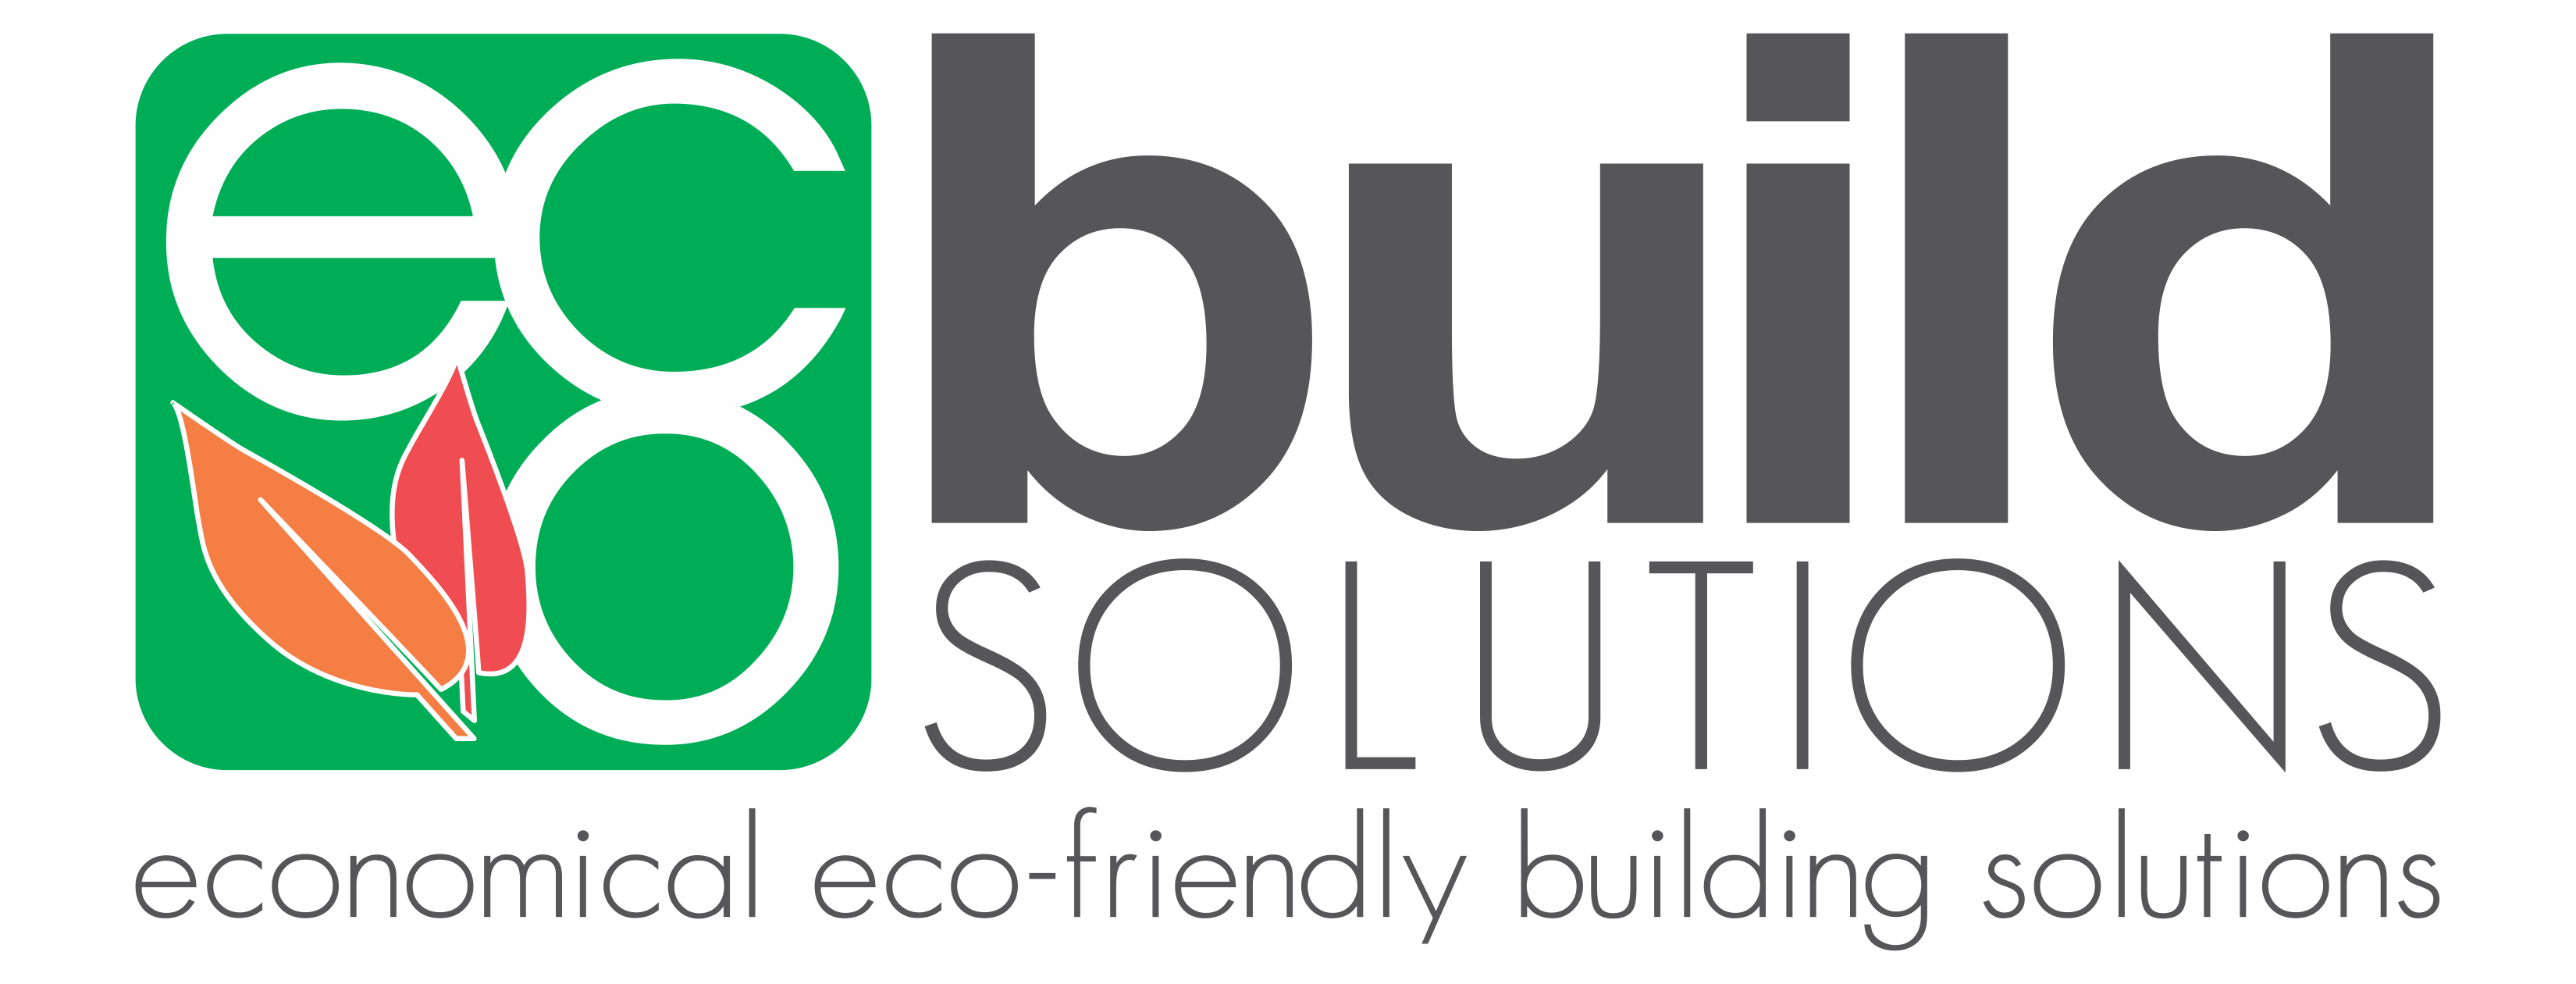 EcoBuild Solutions